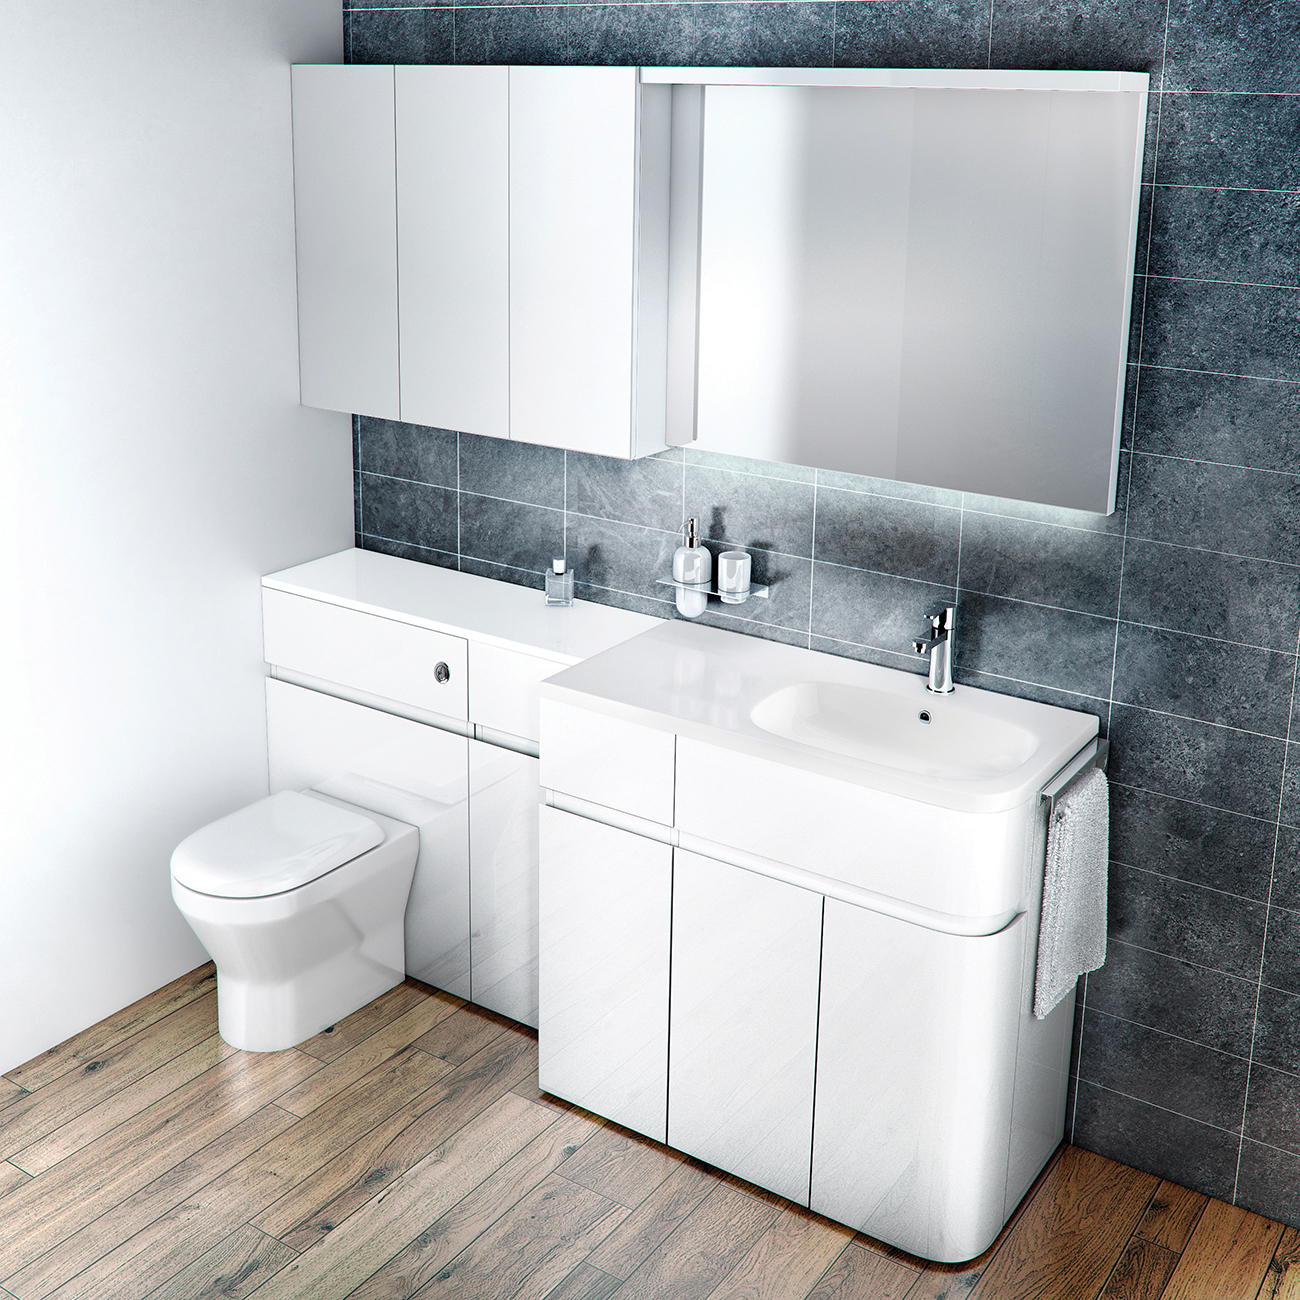 Aqua Cabinets D450 Fitted Bathroom Furniture Uk Bathroom in size 1300 X 1300